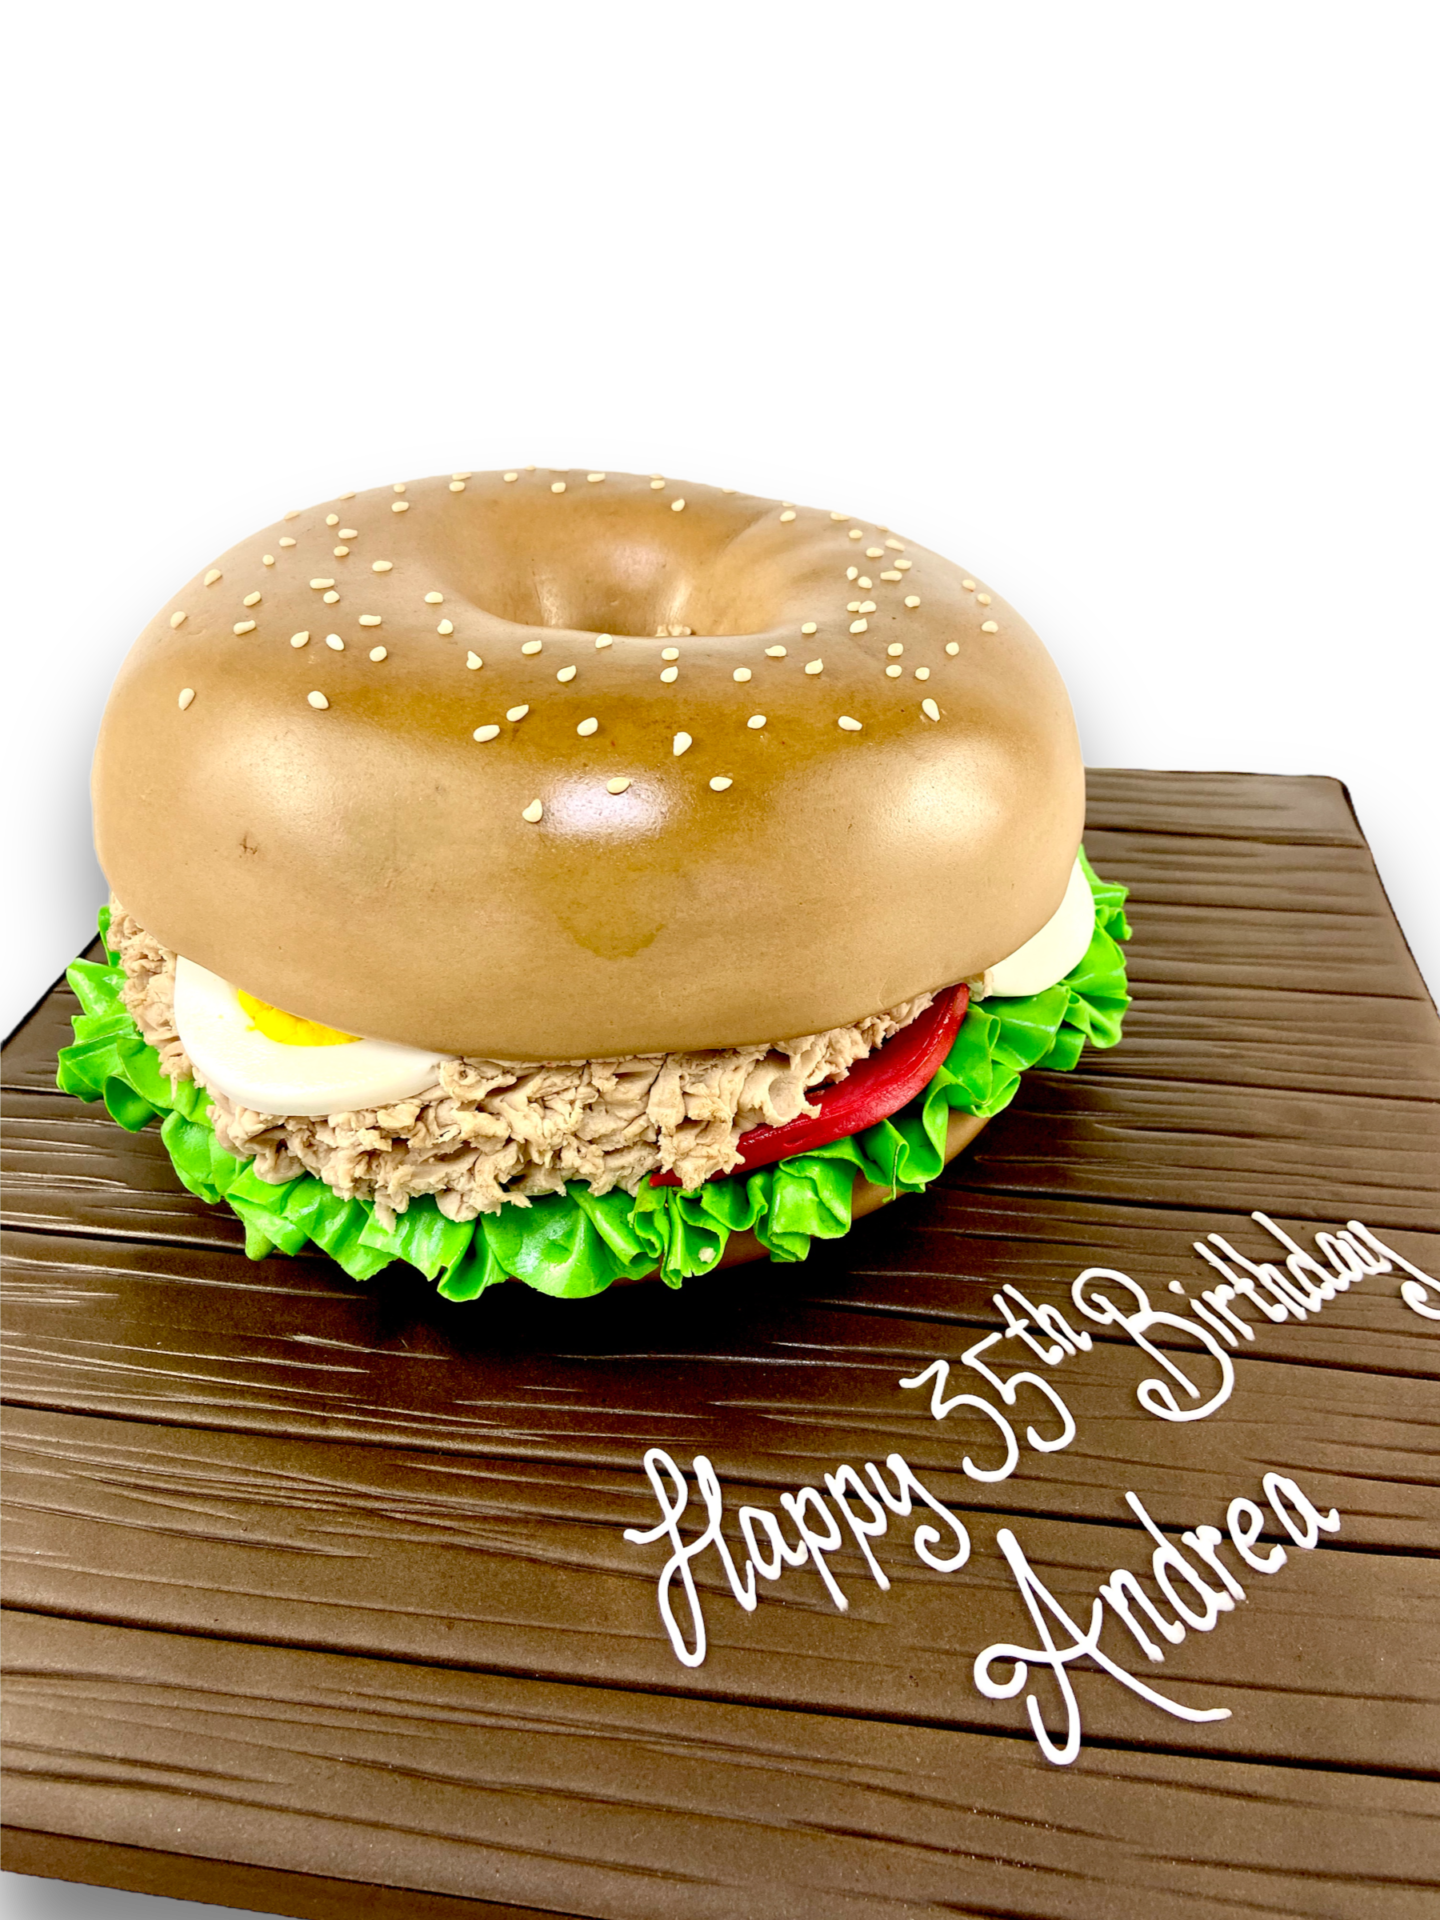 Burger Design Cake - Picture of Kreative Kakez, Pune - Tripadvisor